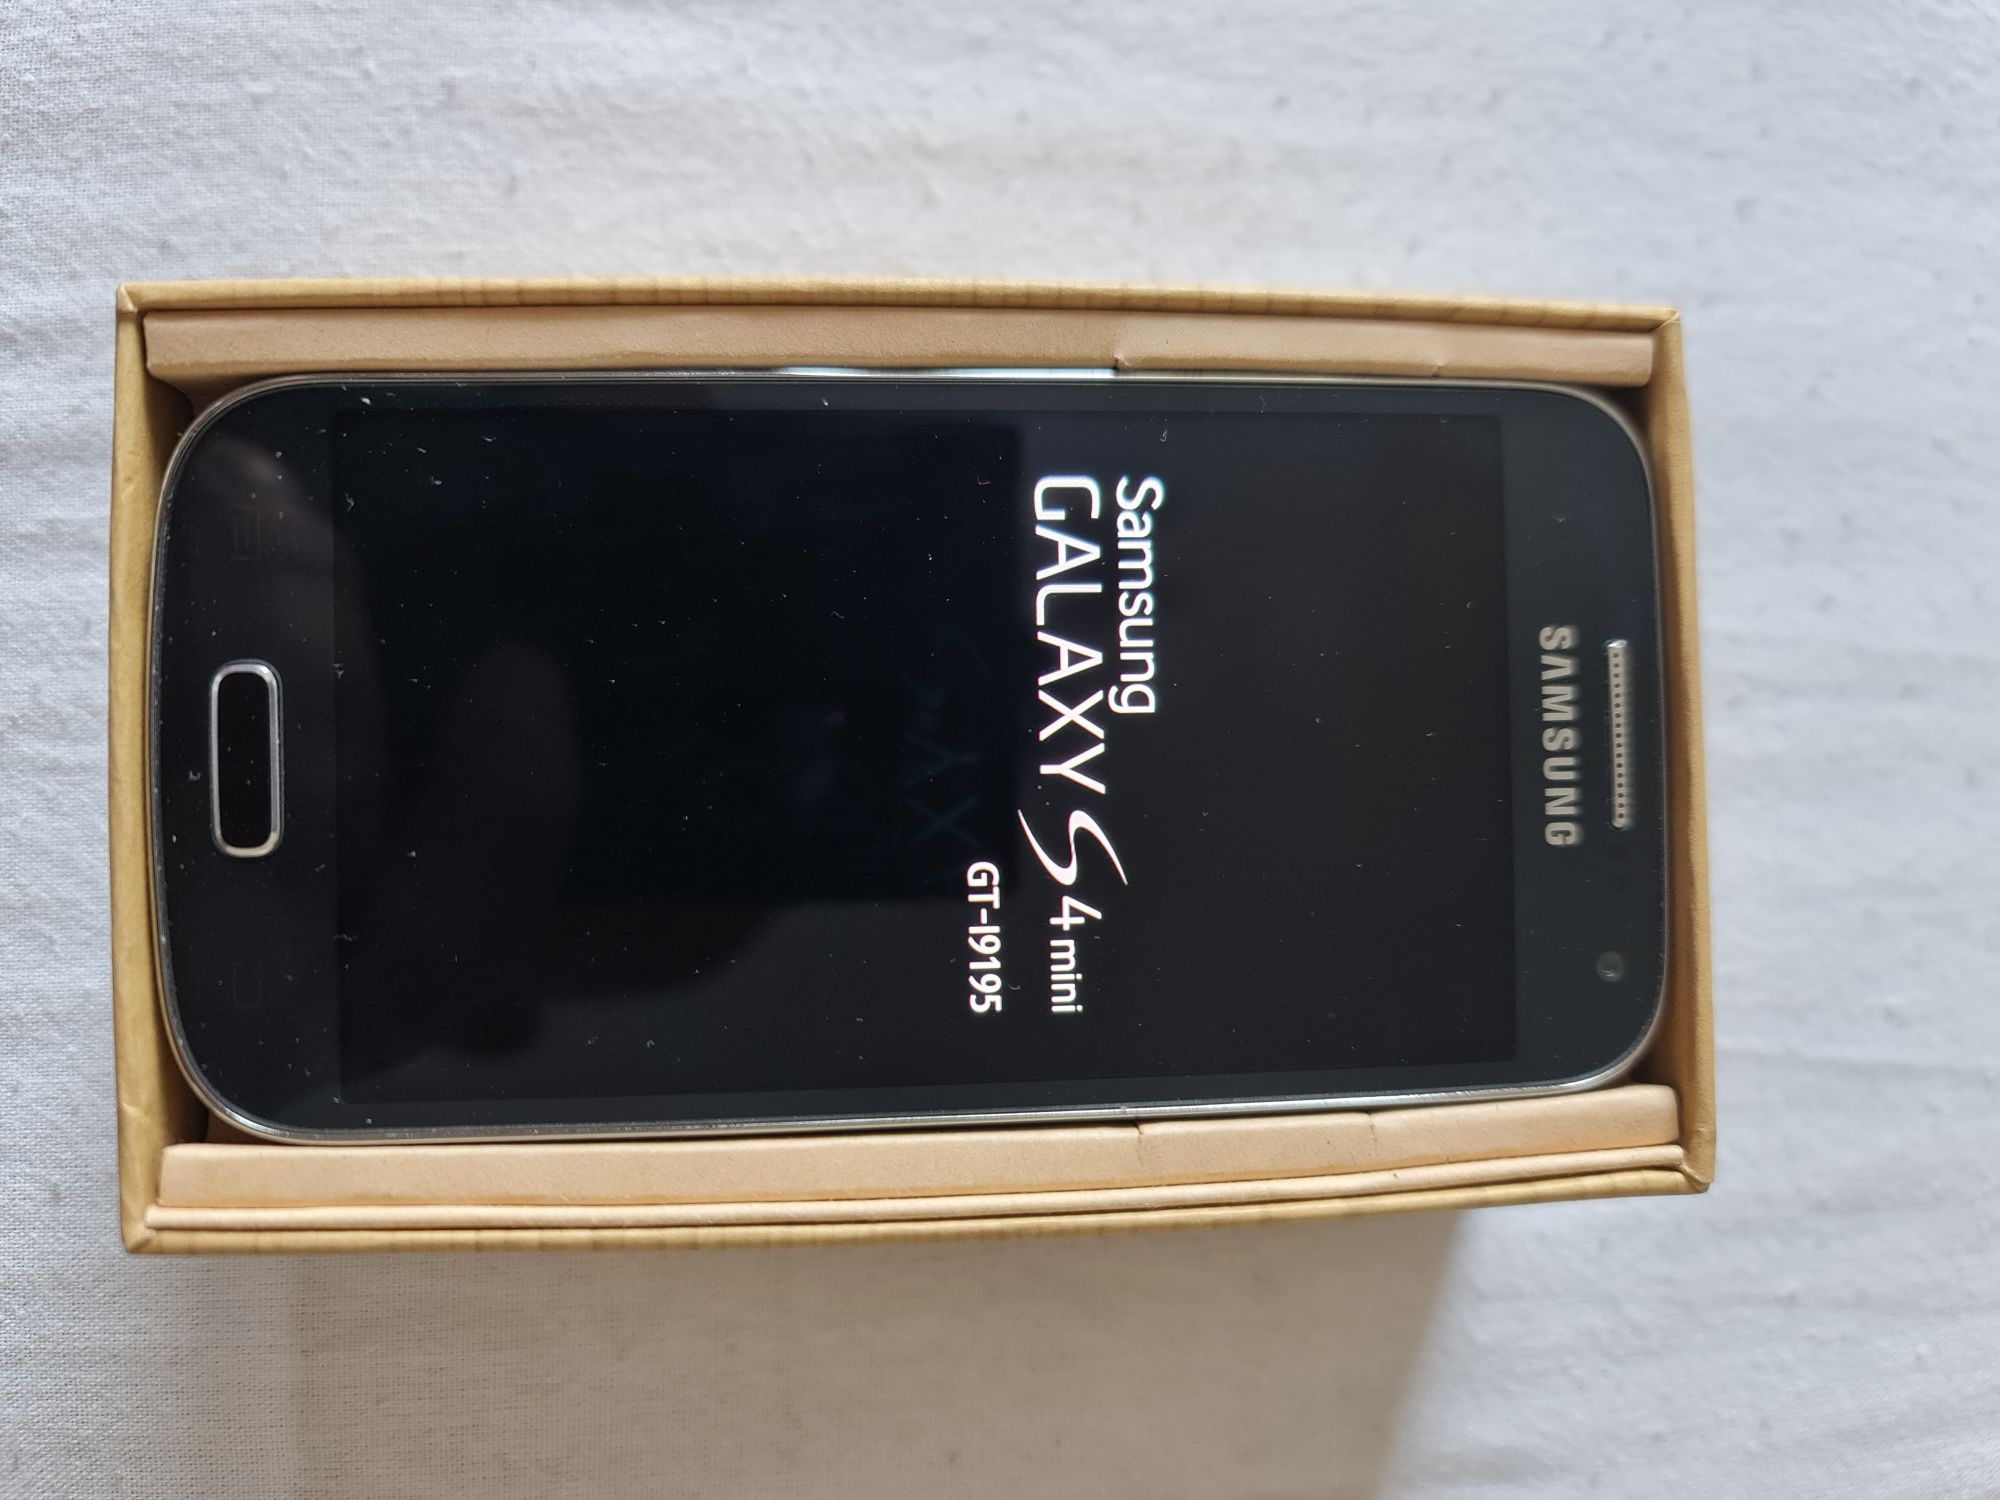 Samsung S4 mini.